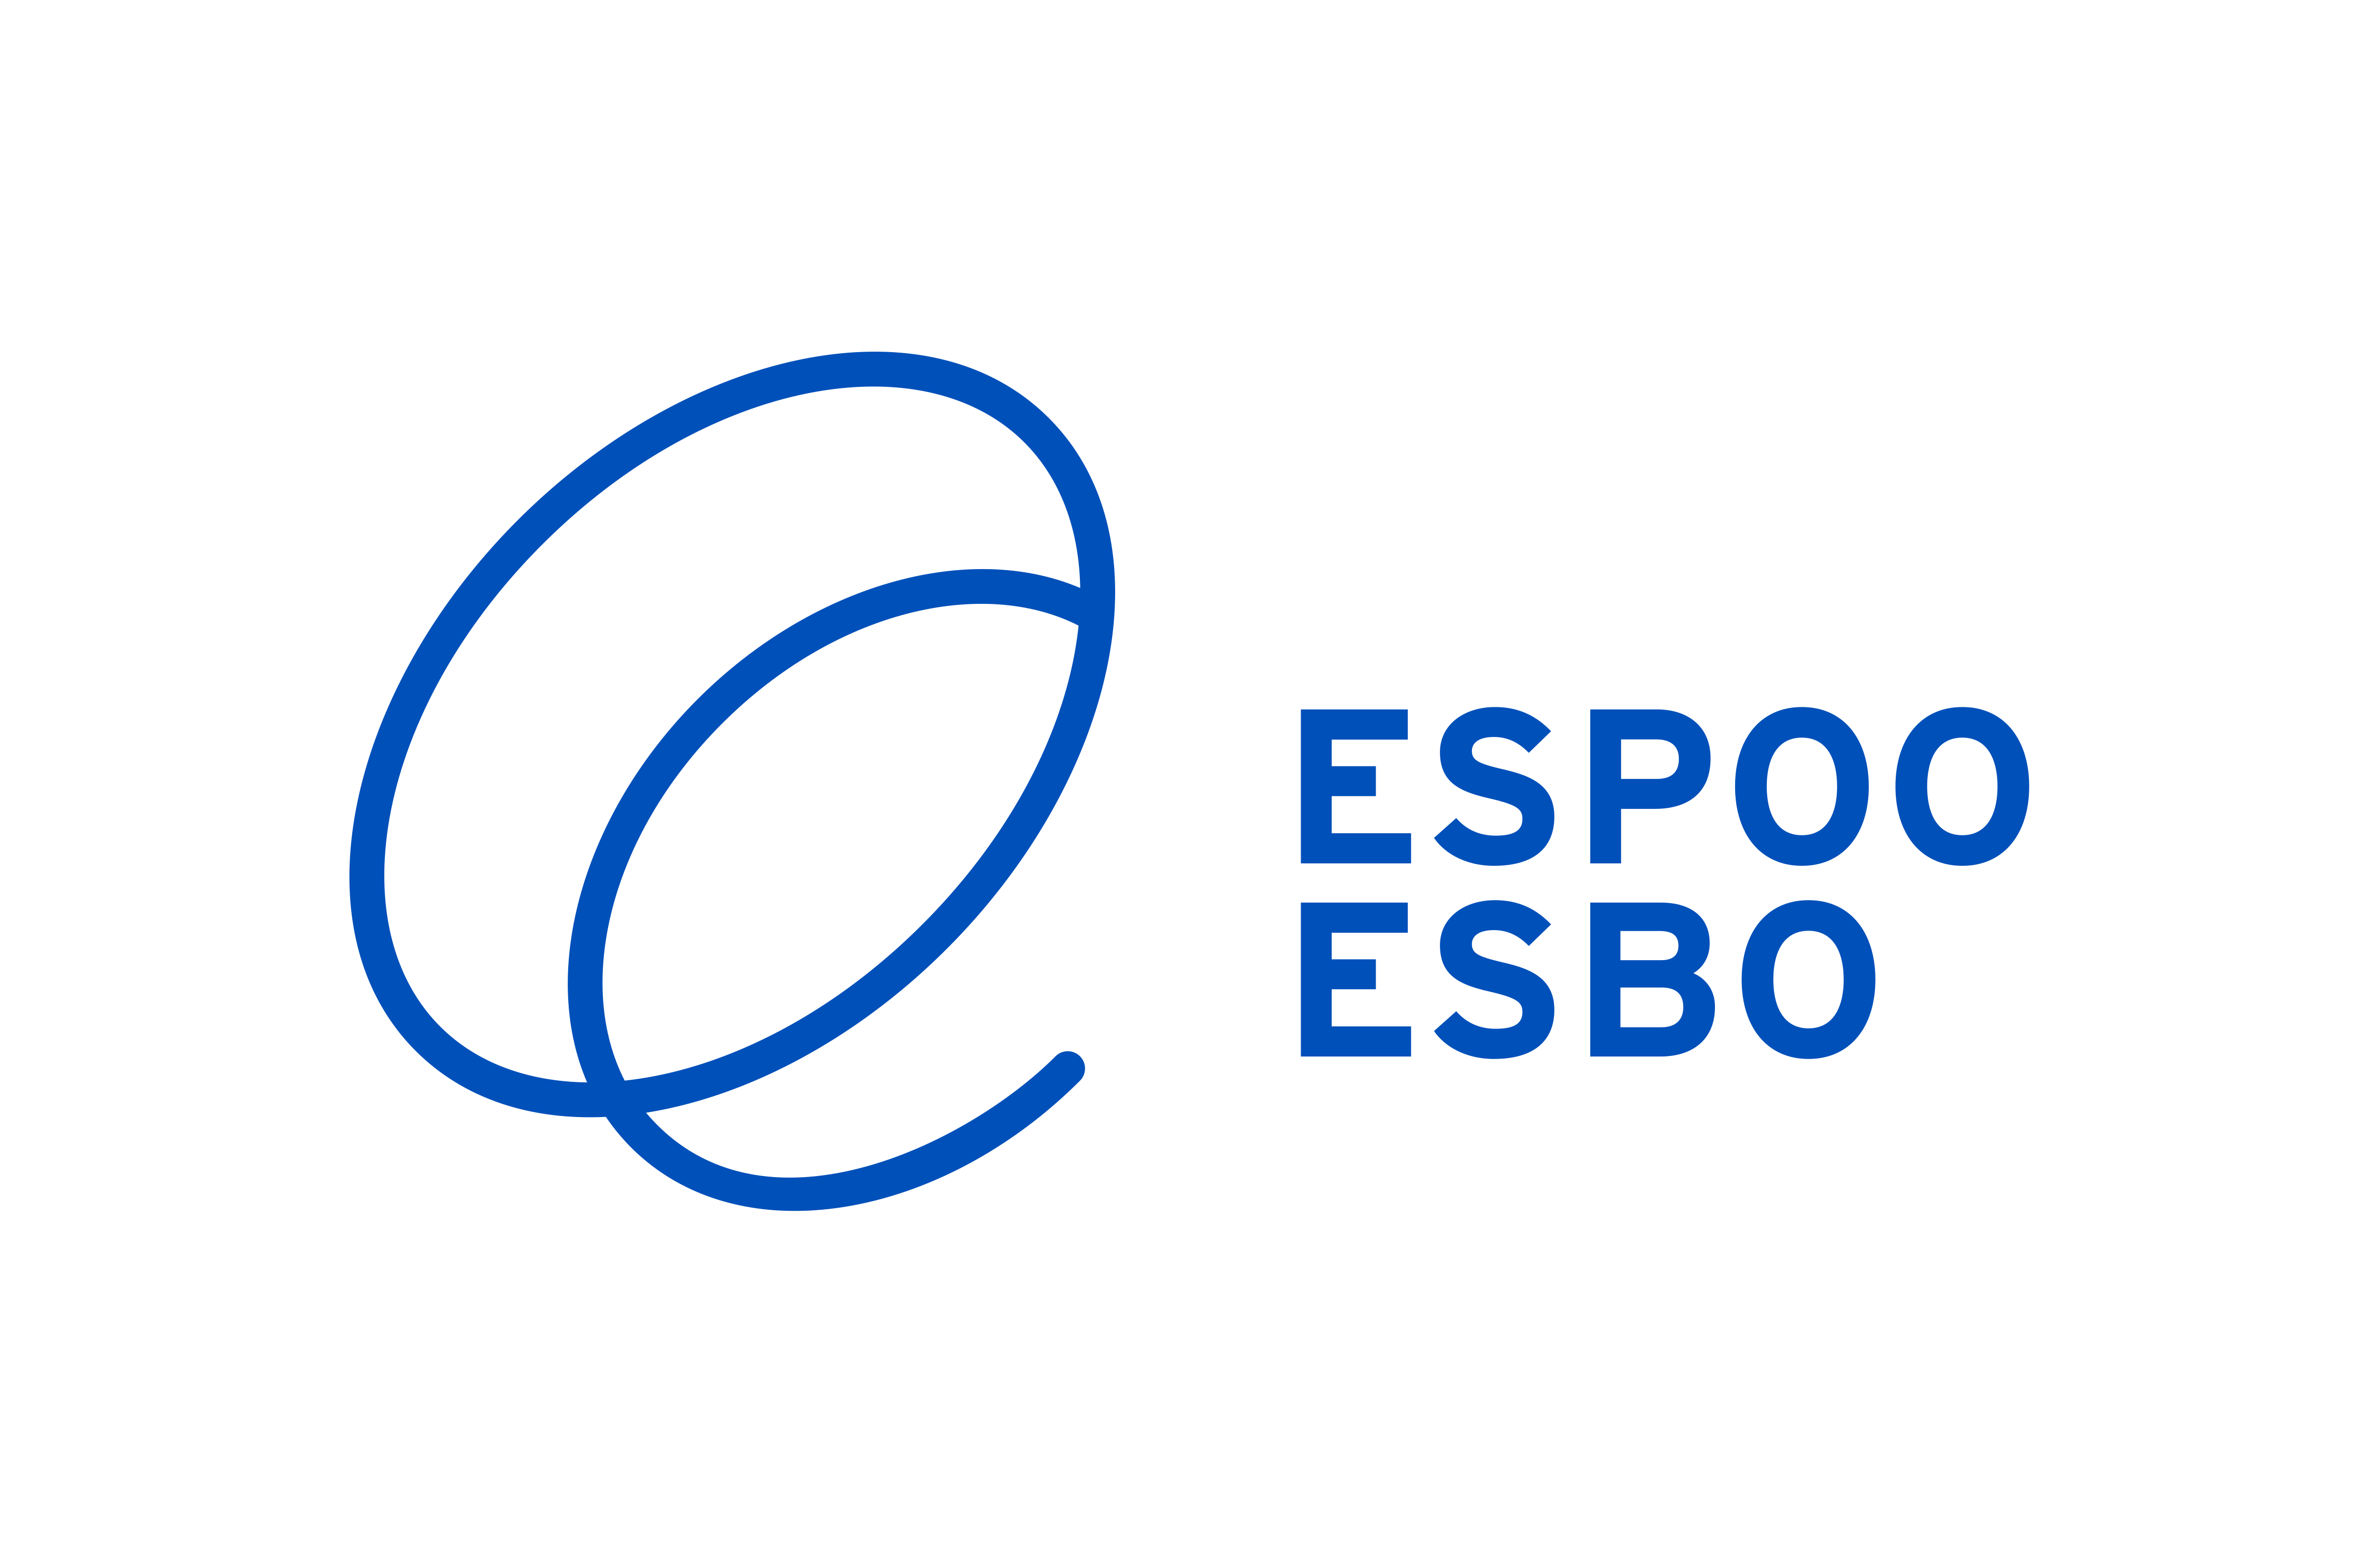 Espoon kaupungin logo